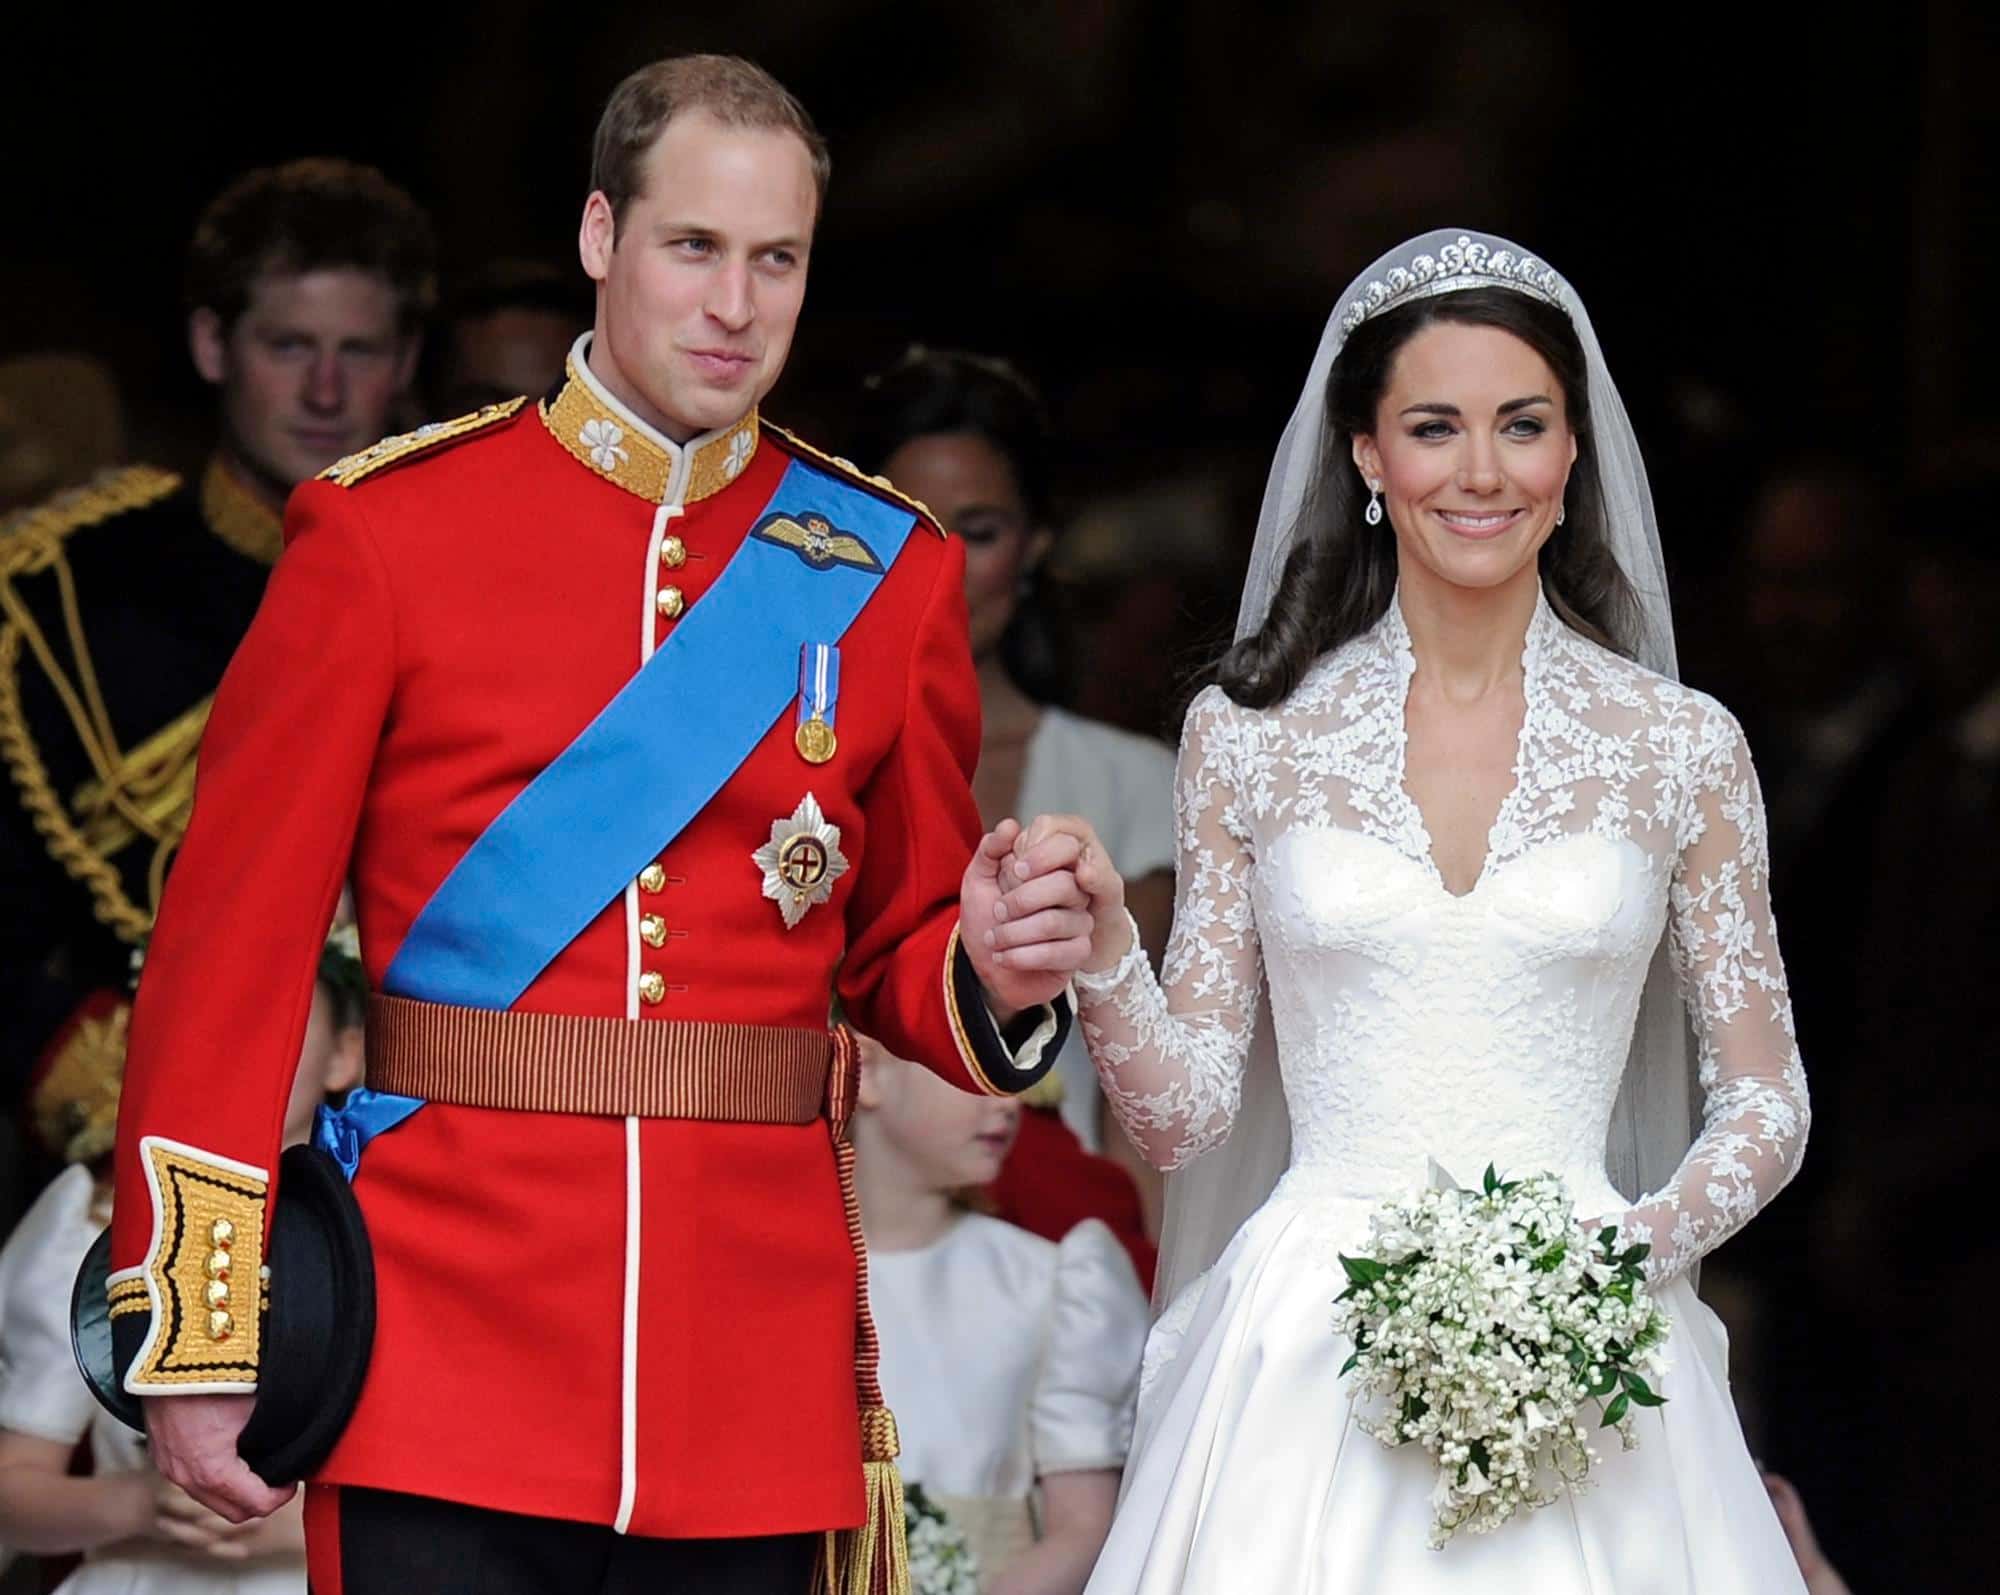 Le mariage du prince Harry avec Kate Middleton